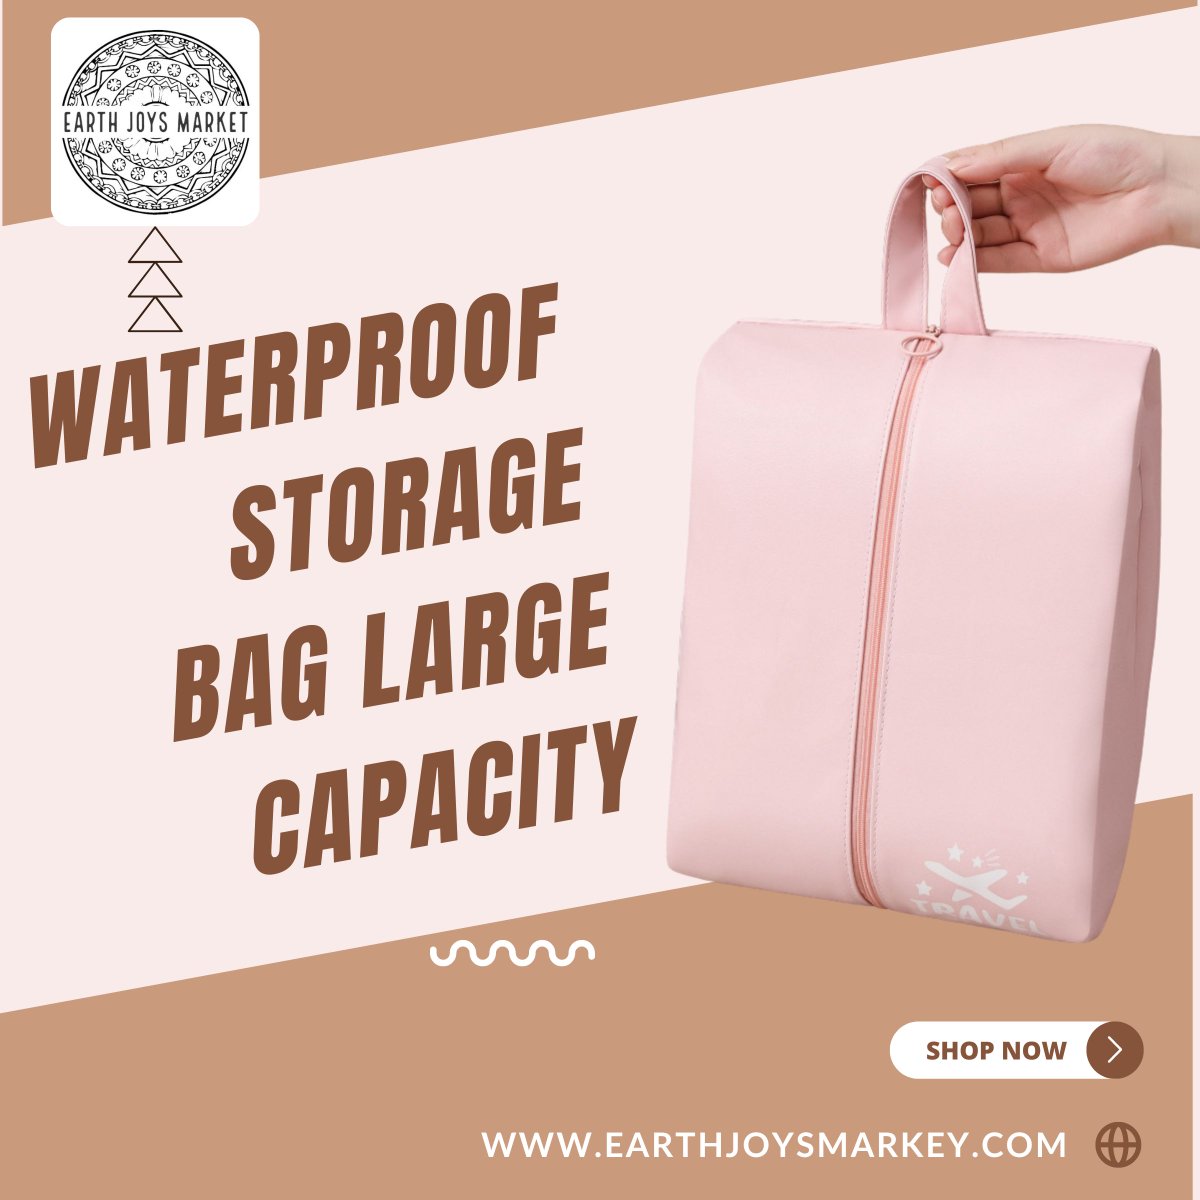 'Convenience and Style: Waterproof Storage Bag Large Capacity at Earth Joys Market!'
Shop Now: ➡ earthjoysmarket.com/product/waterp…

#EarthJoysMarket #Bag #StylishBag #Wallet #ShopNow #OnlineShop #stylishbags #fashionablebags #latherbag #Amazon #alibaba